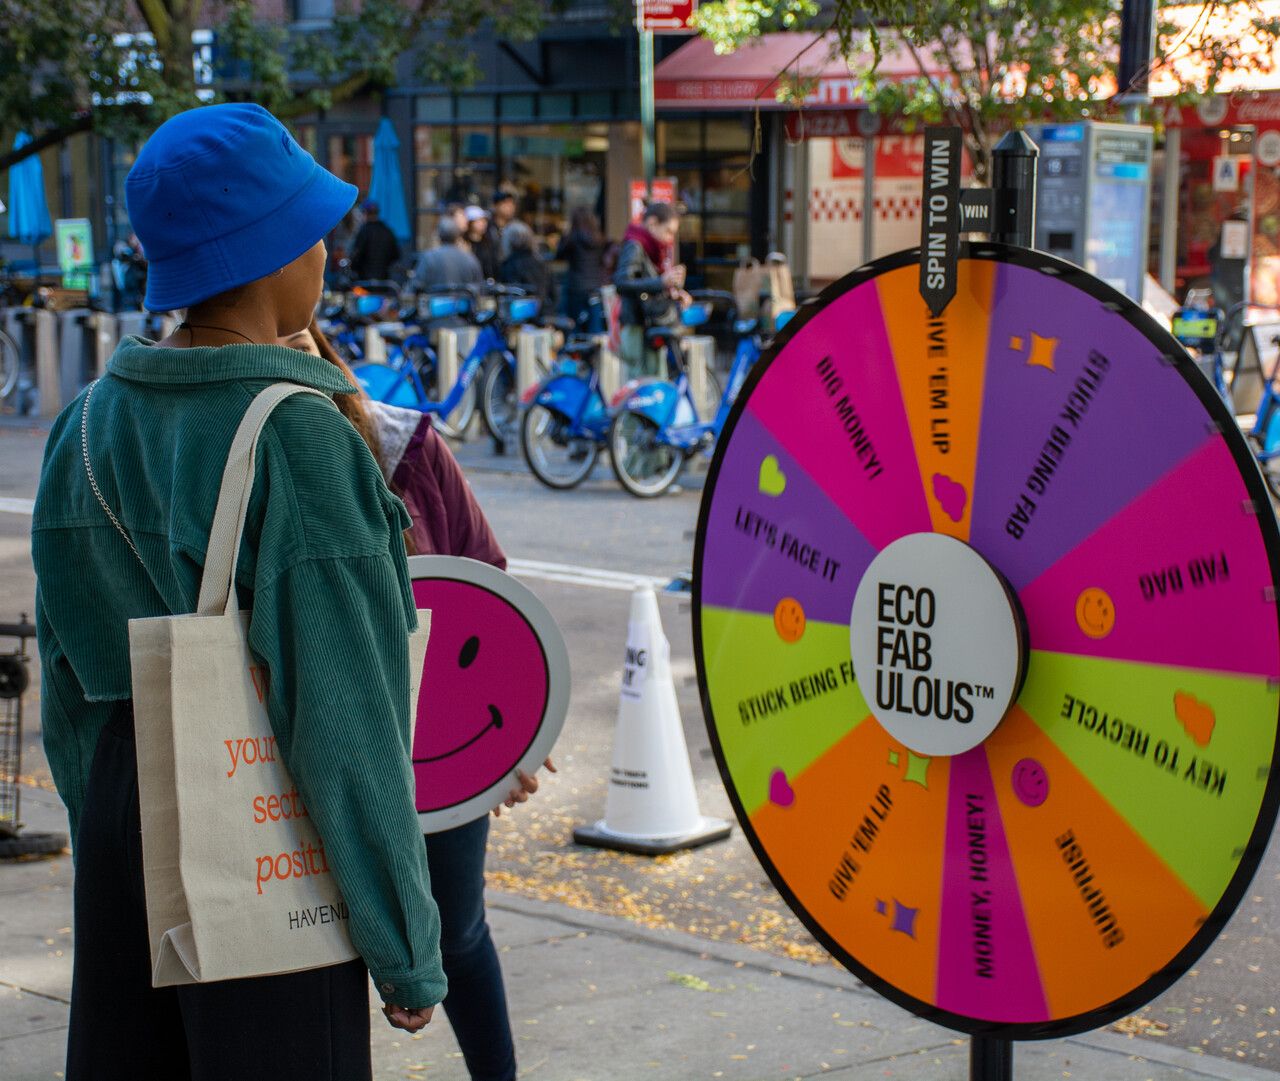 EcoFabulous prize wheel at brand promotion.